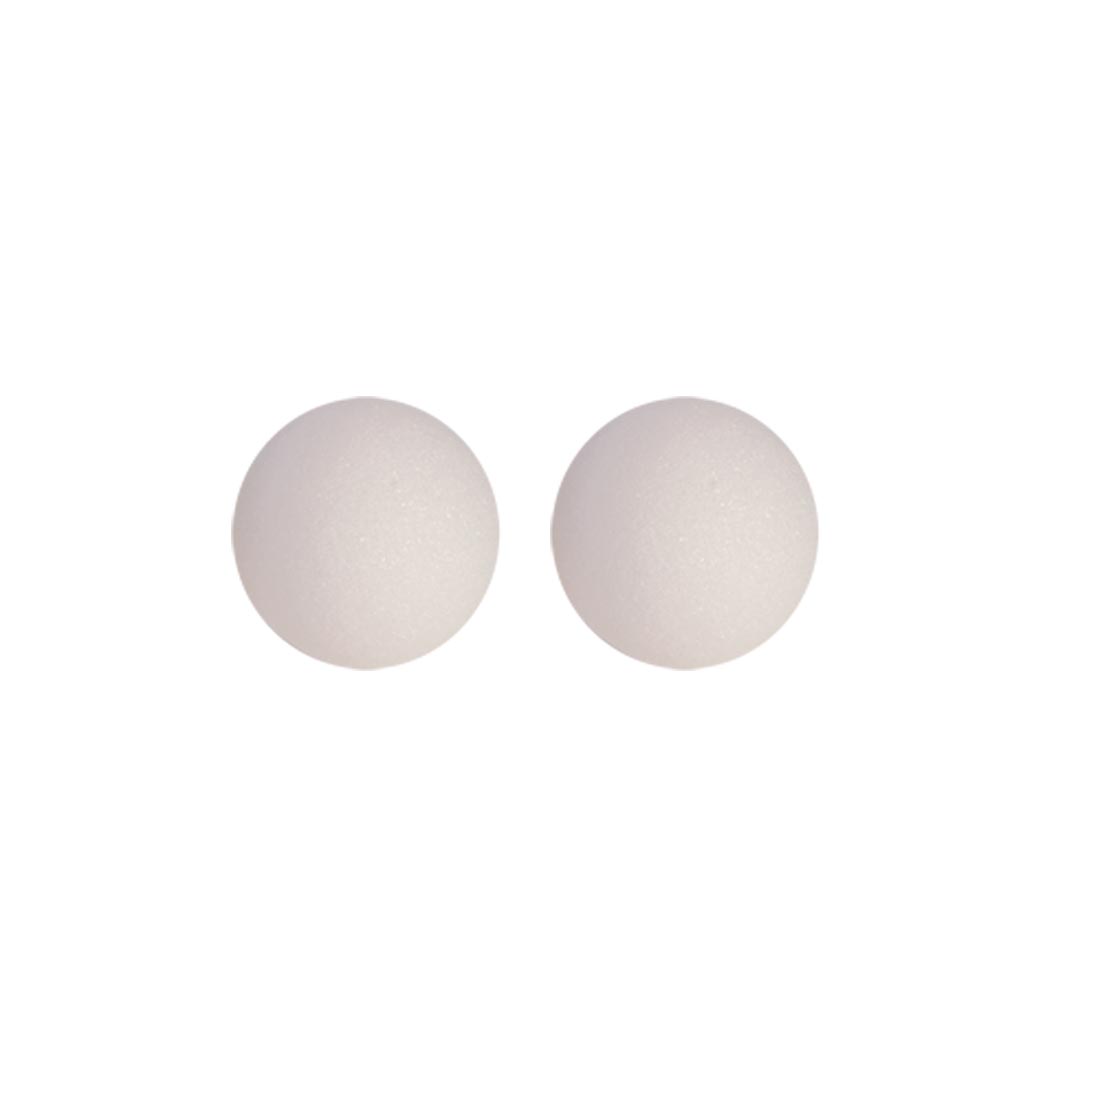 Two White Styrofoam Balls